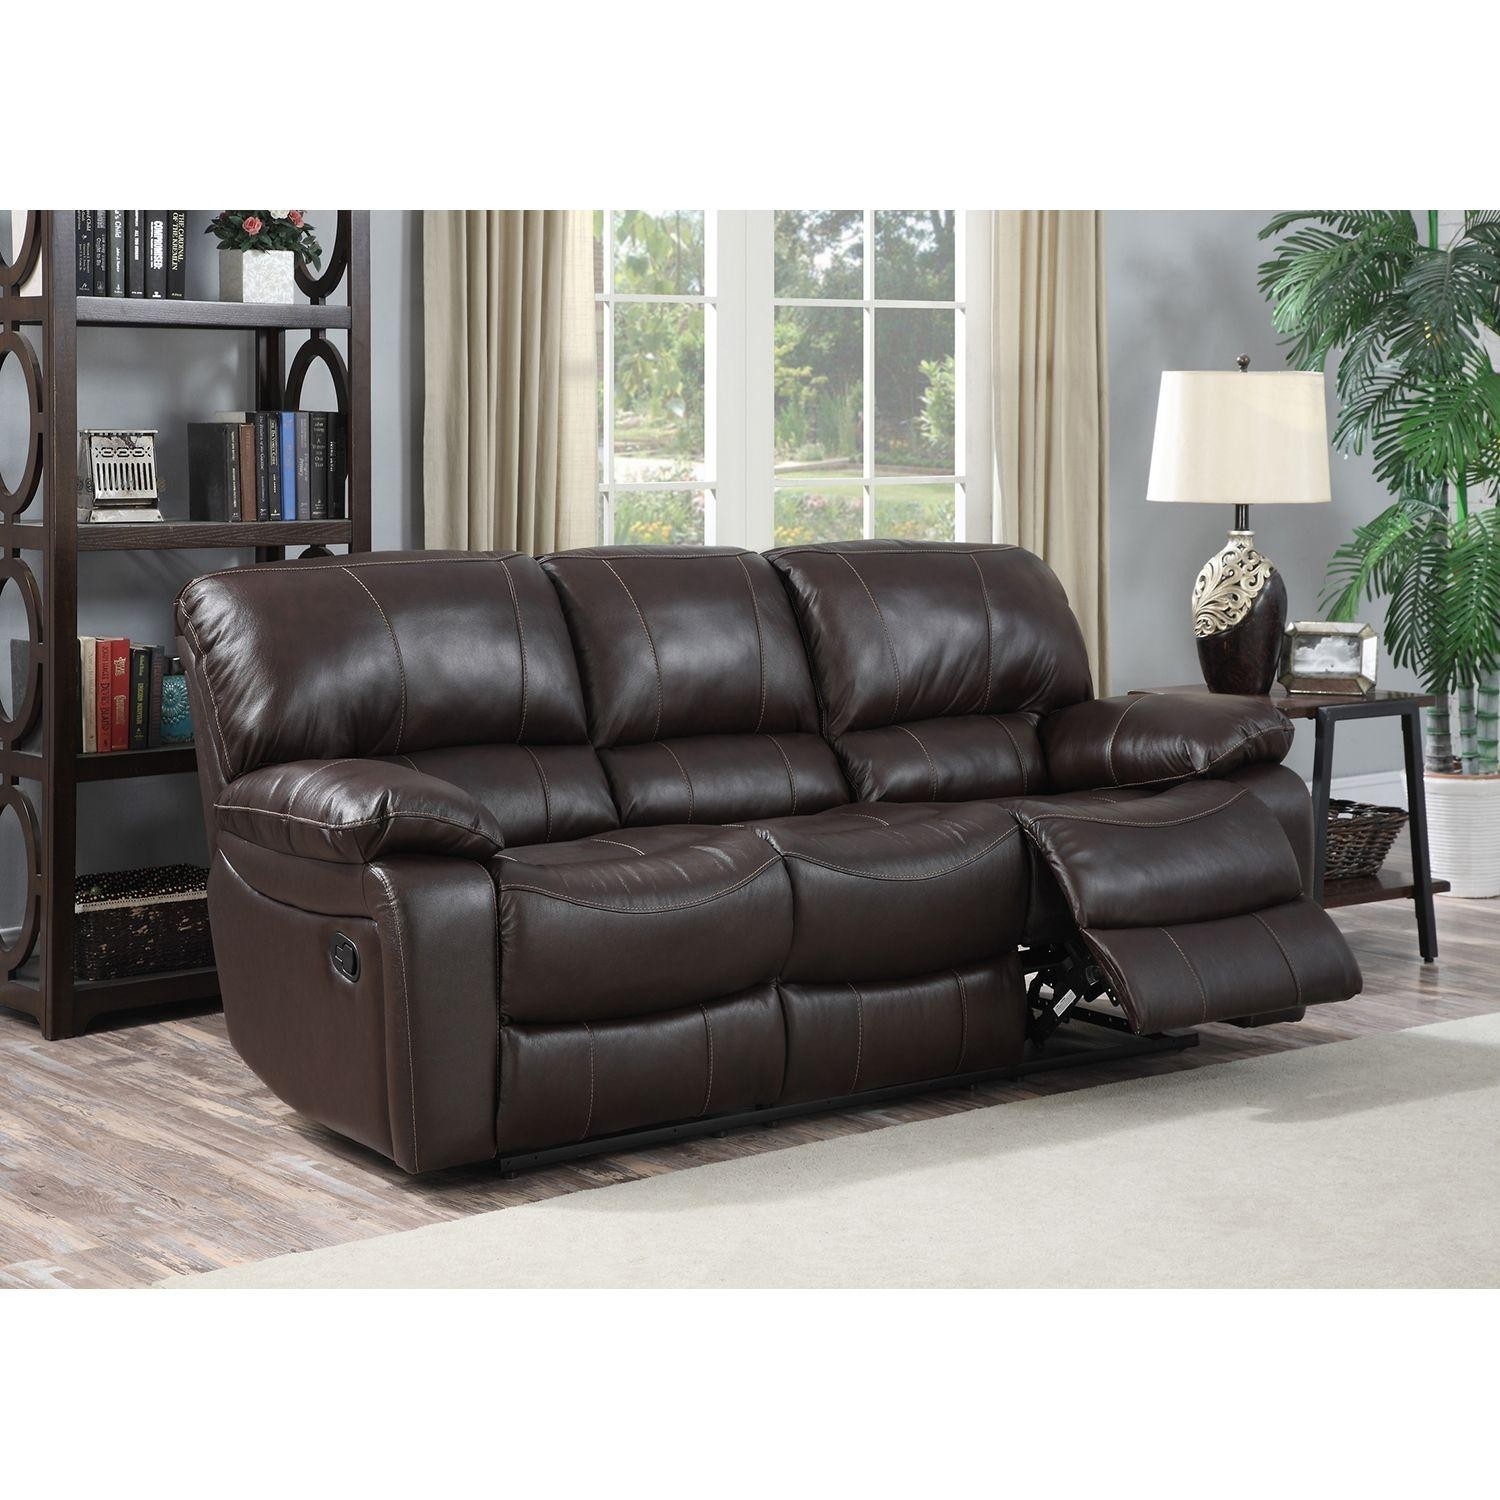 20 top berkline leather recliner sofas sofa ideas 1